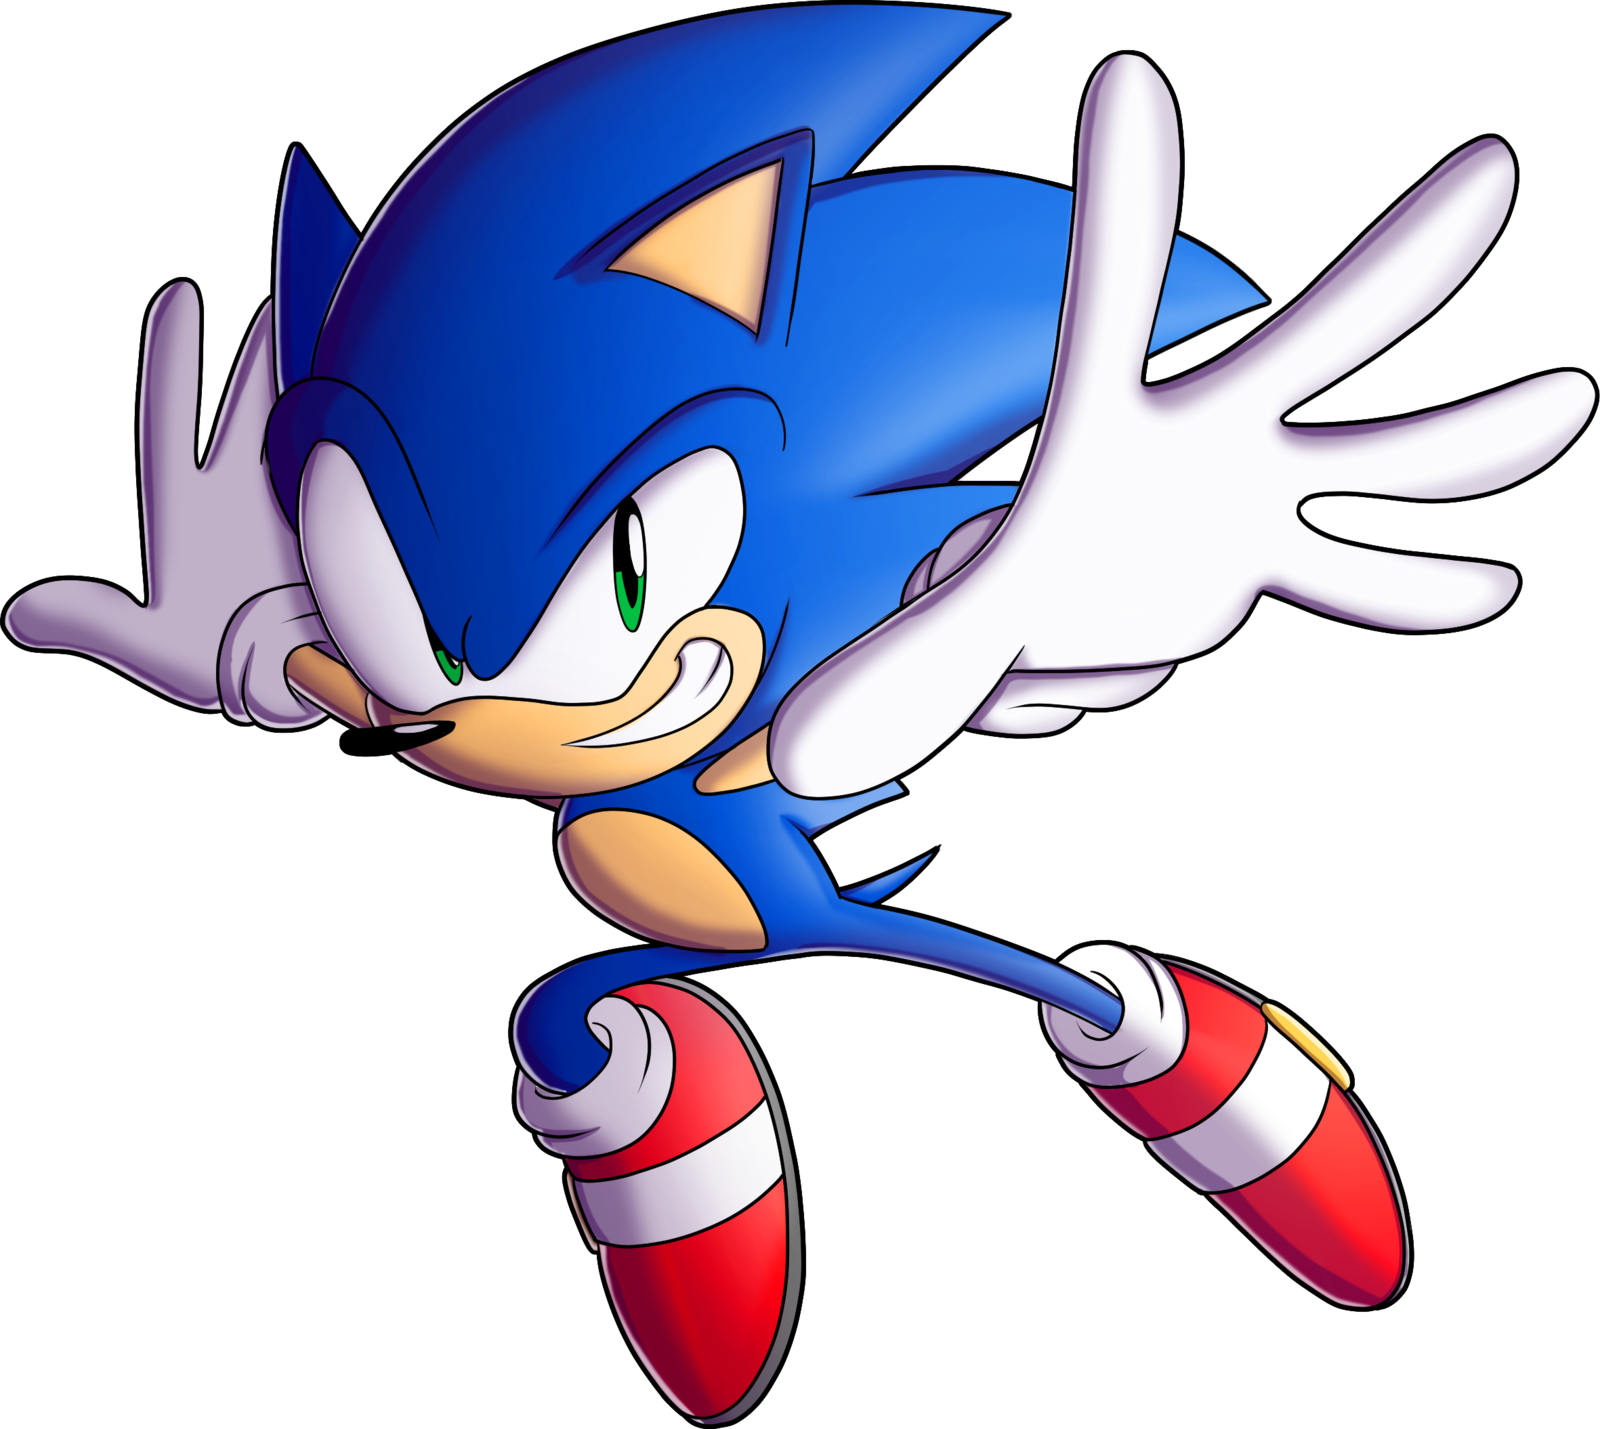 Download Sonic Vertebrate Mania Forces The Cartoon Hedgehog HQ PNG Image |  FreePNGImg